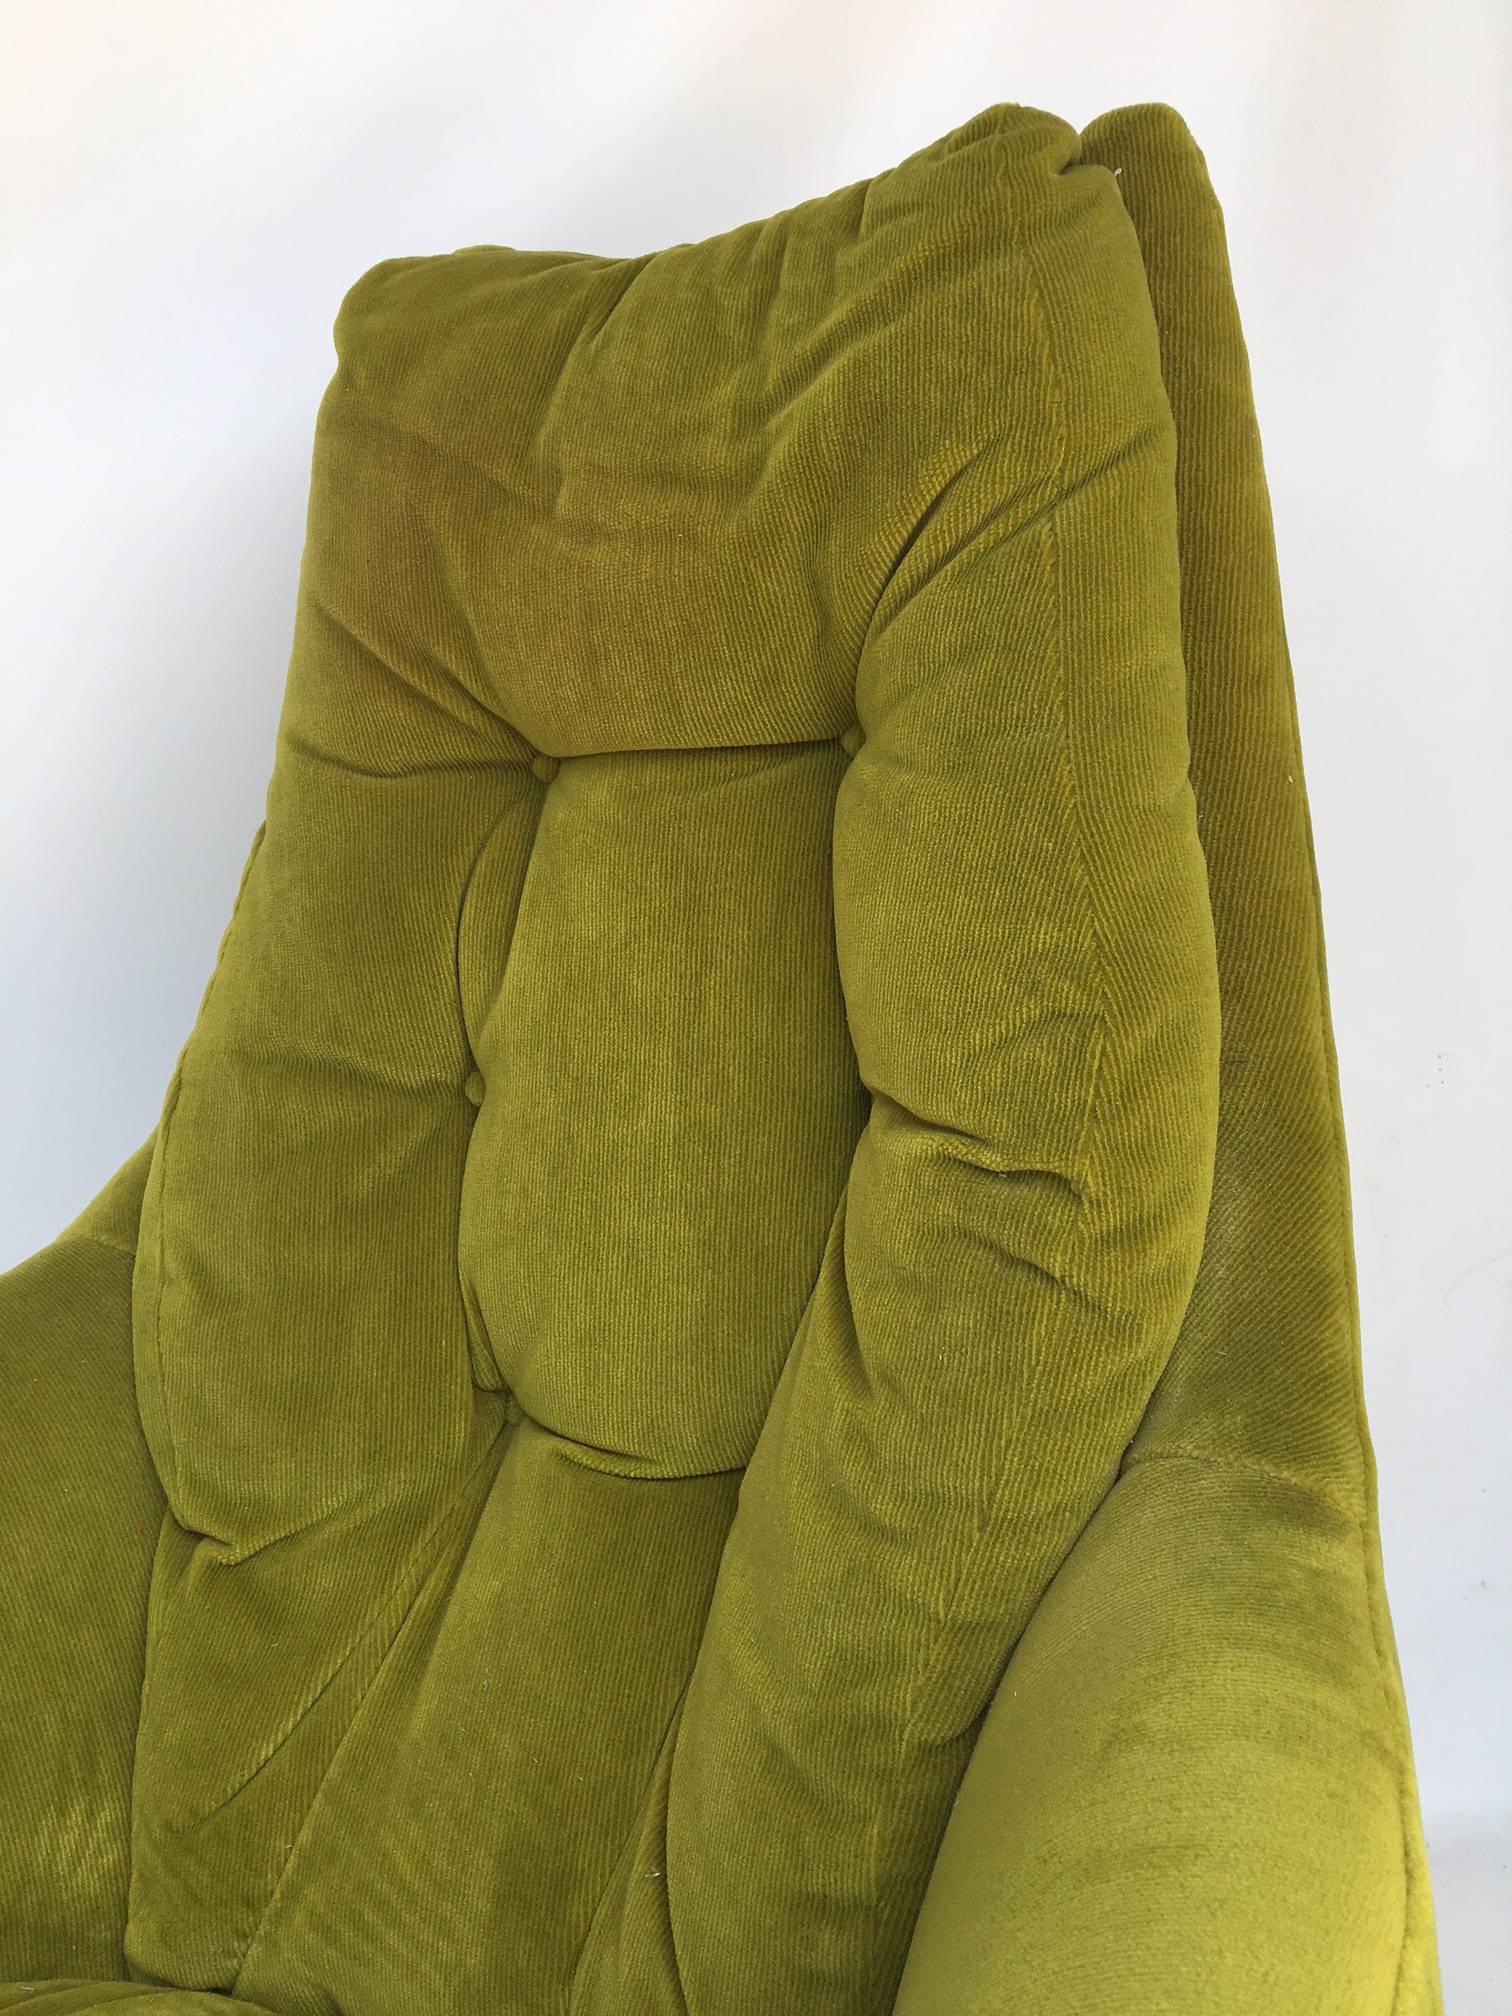 Hollywood Regency Milo Baughman Thayer Coggin Plush Mod Swivel Lounge Chair